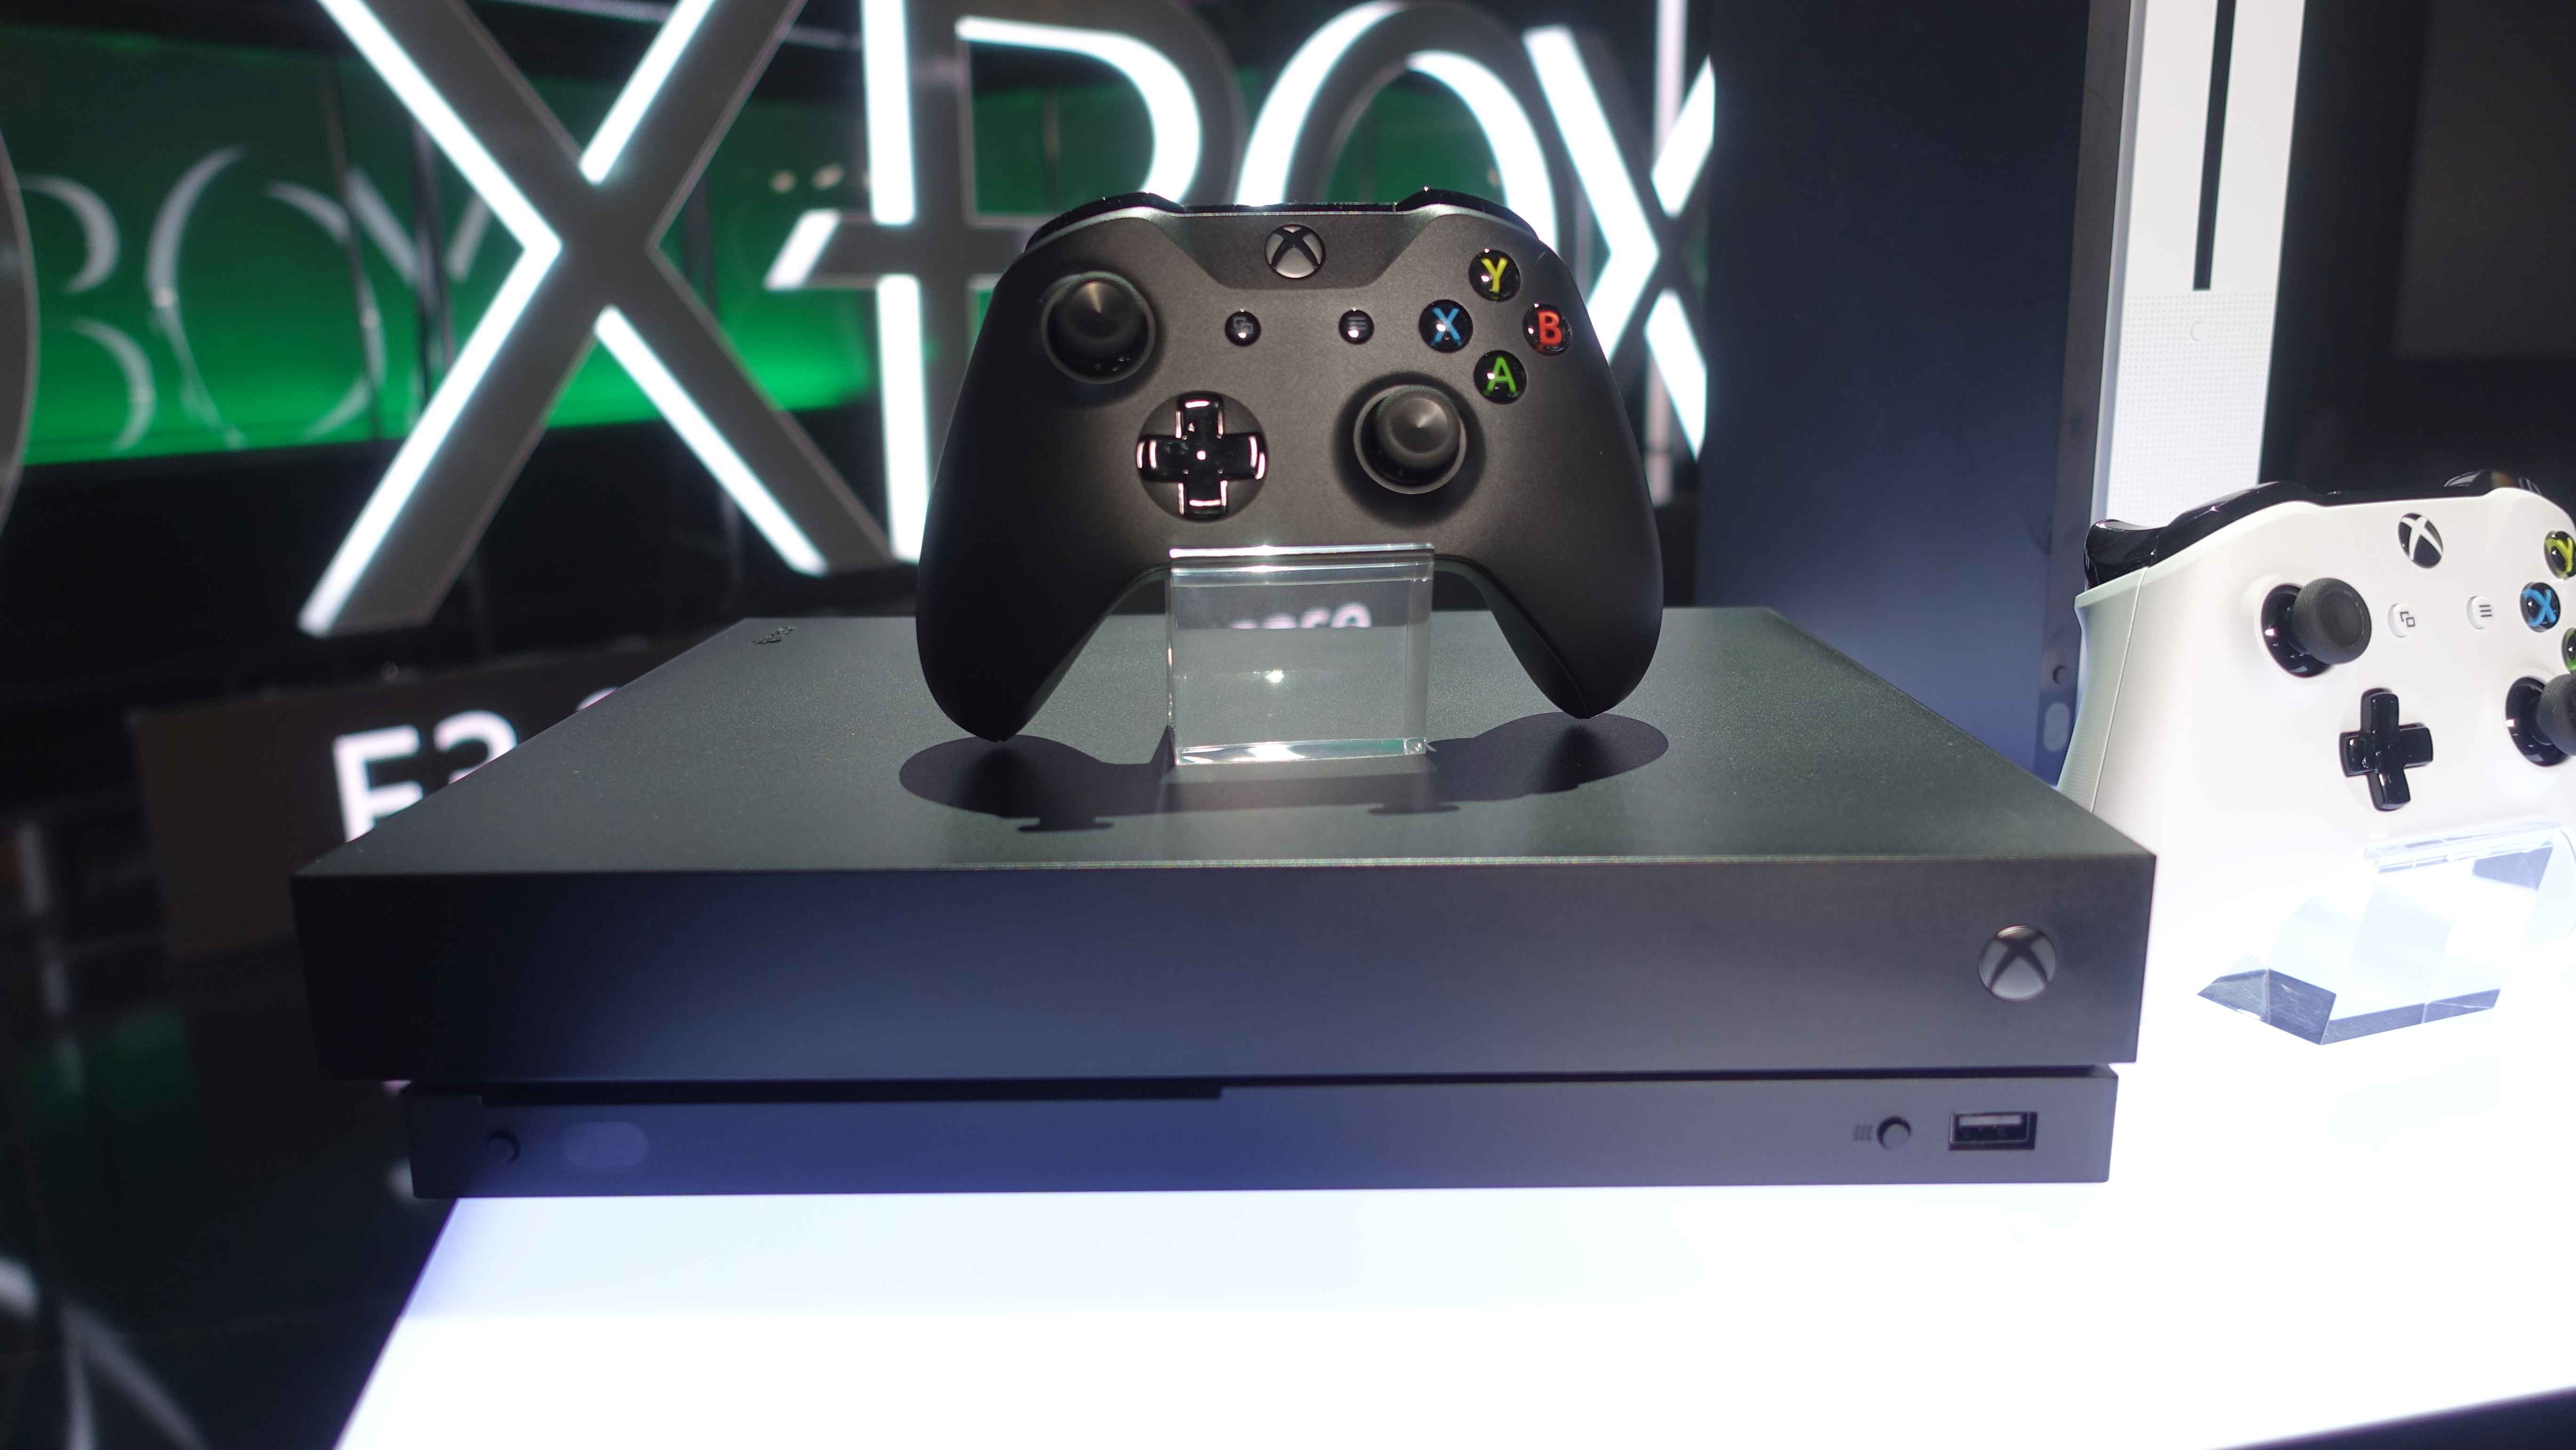 Xbox One X es lanzado a nivel mundial de forma oficial